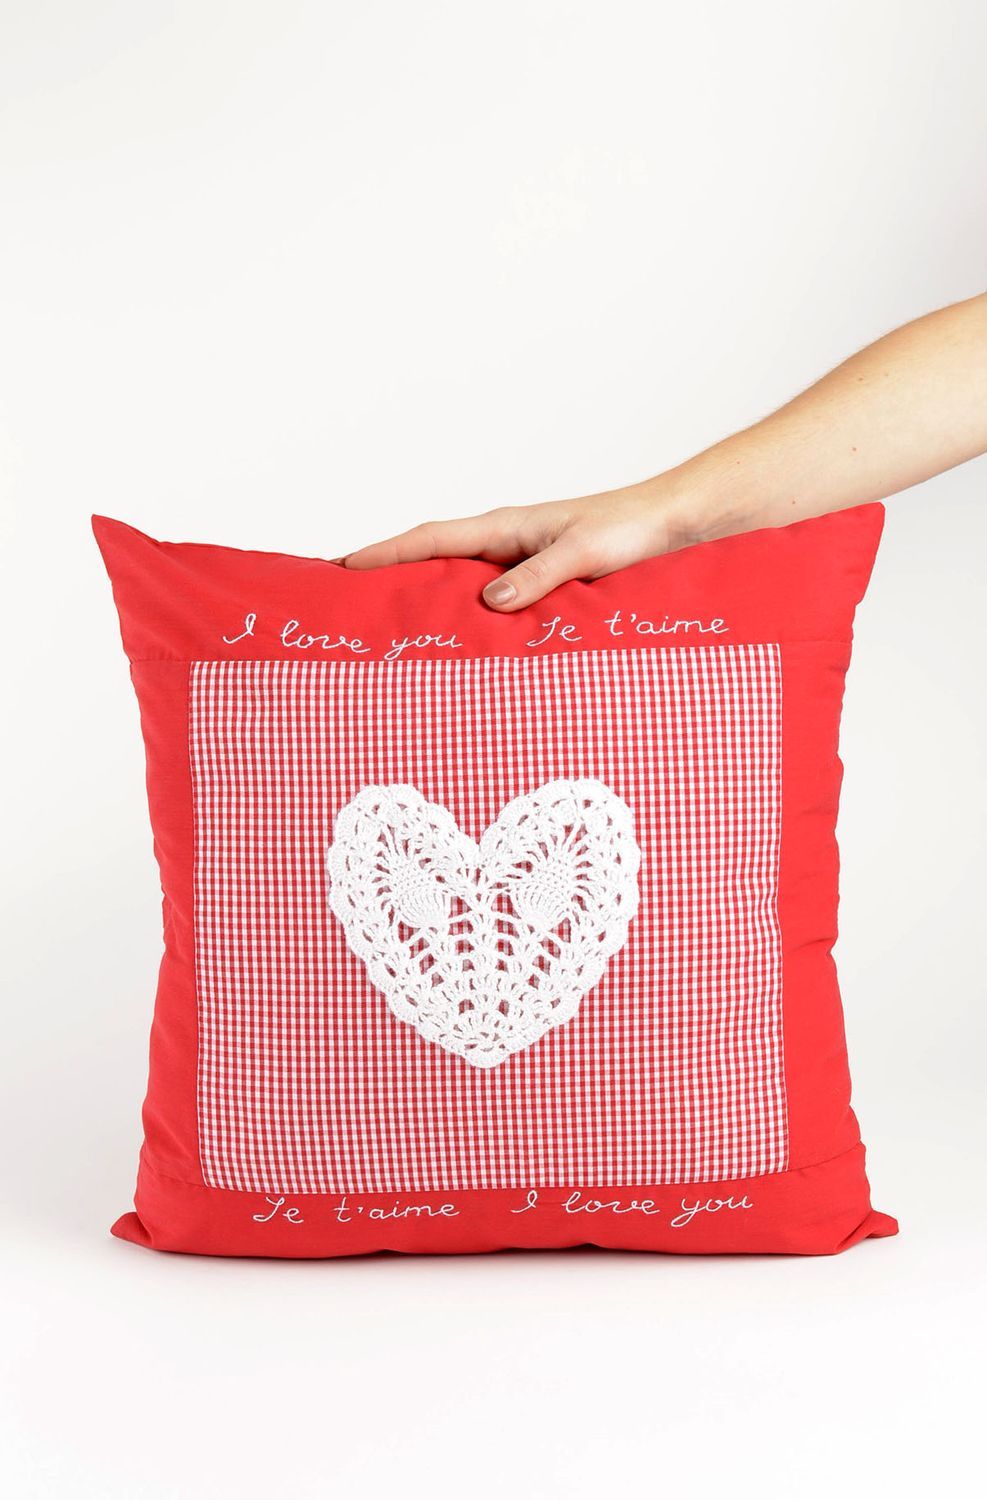 Unusual handmade throw pillow design decorative cushion interior decorating photo 4